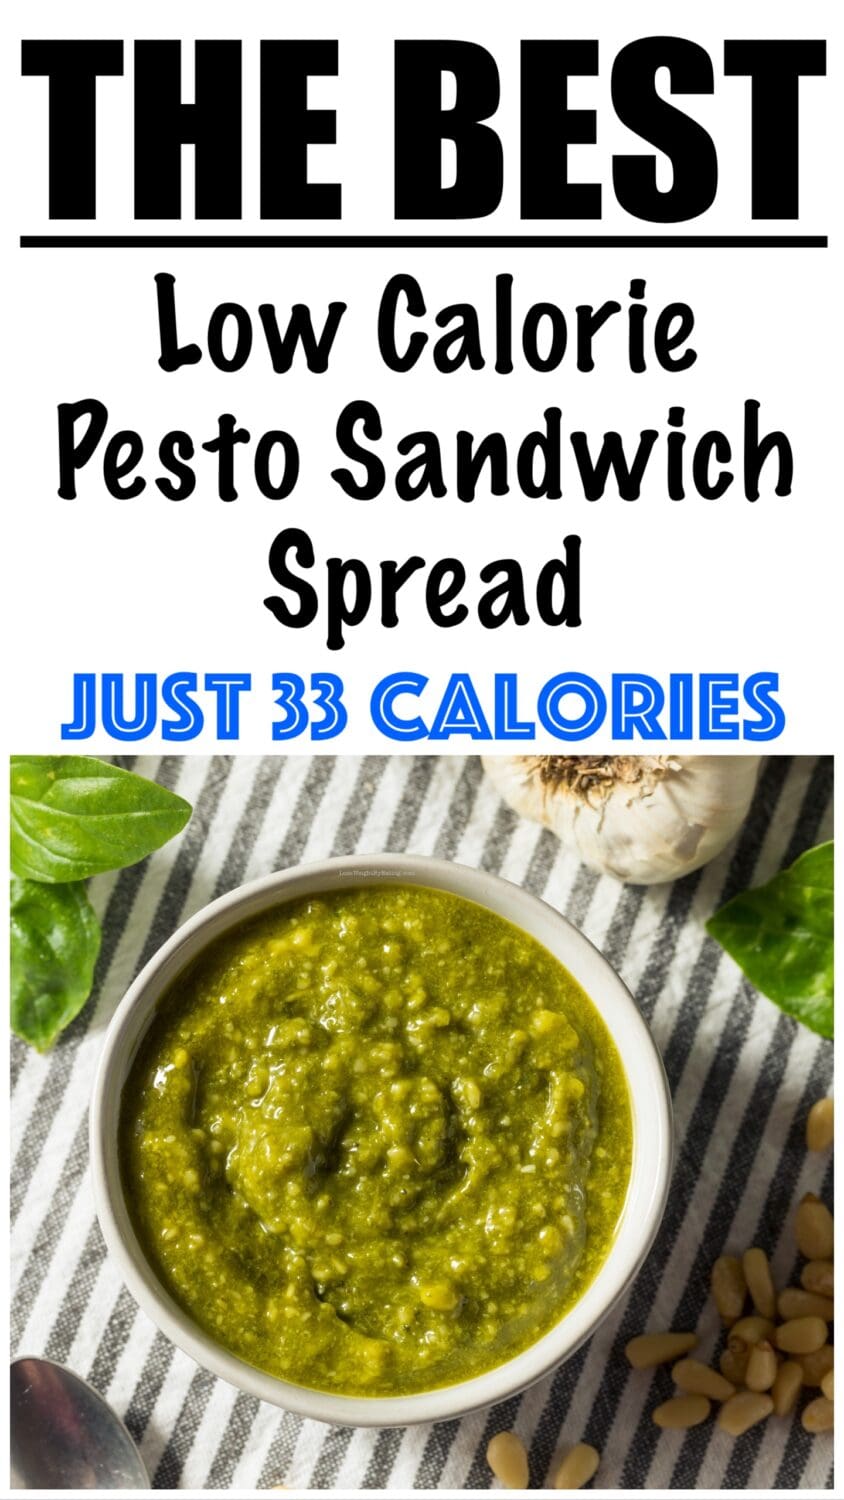 Low Calorie Pesto Sandwich Spread Recipe